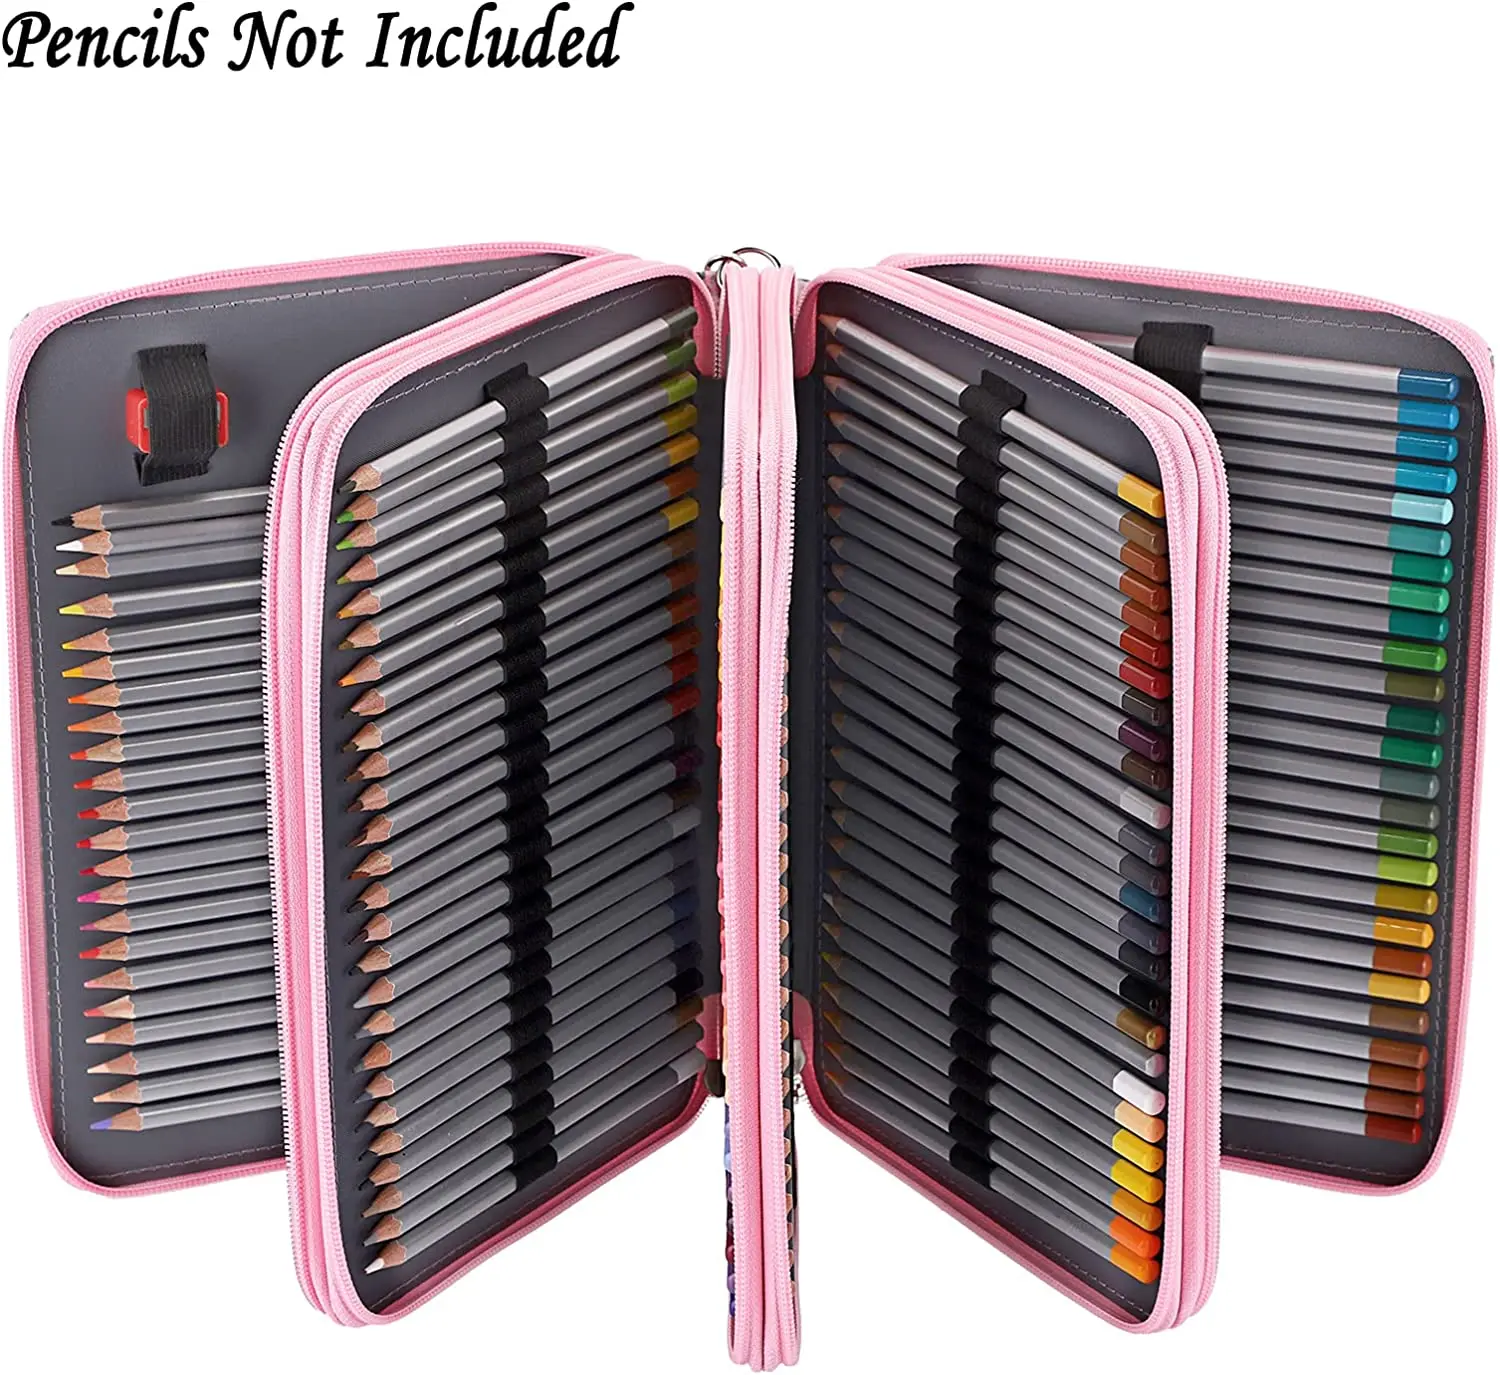 220 Slots Pencil Case Pen Organizer Bag With Handy Wrap Zipper Multilayer  Holder for Prismacolor Colored Pencils & Gel Pen Case - AliExpress